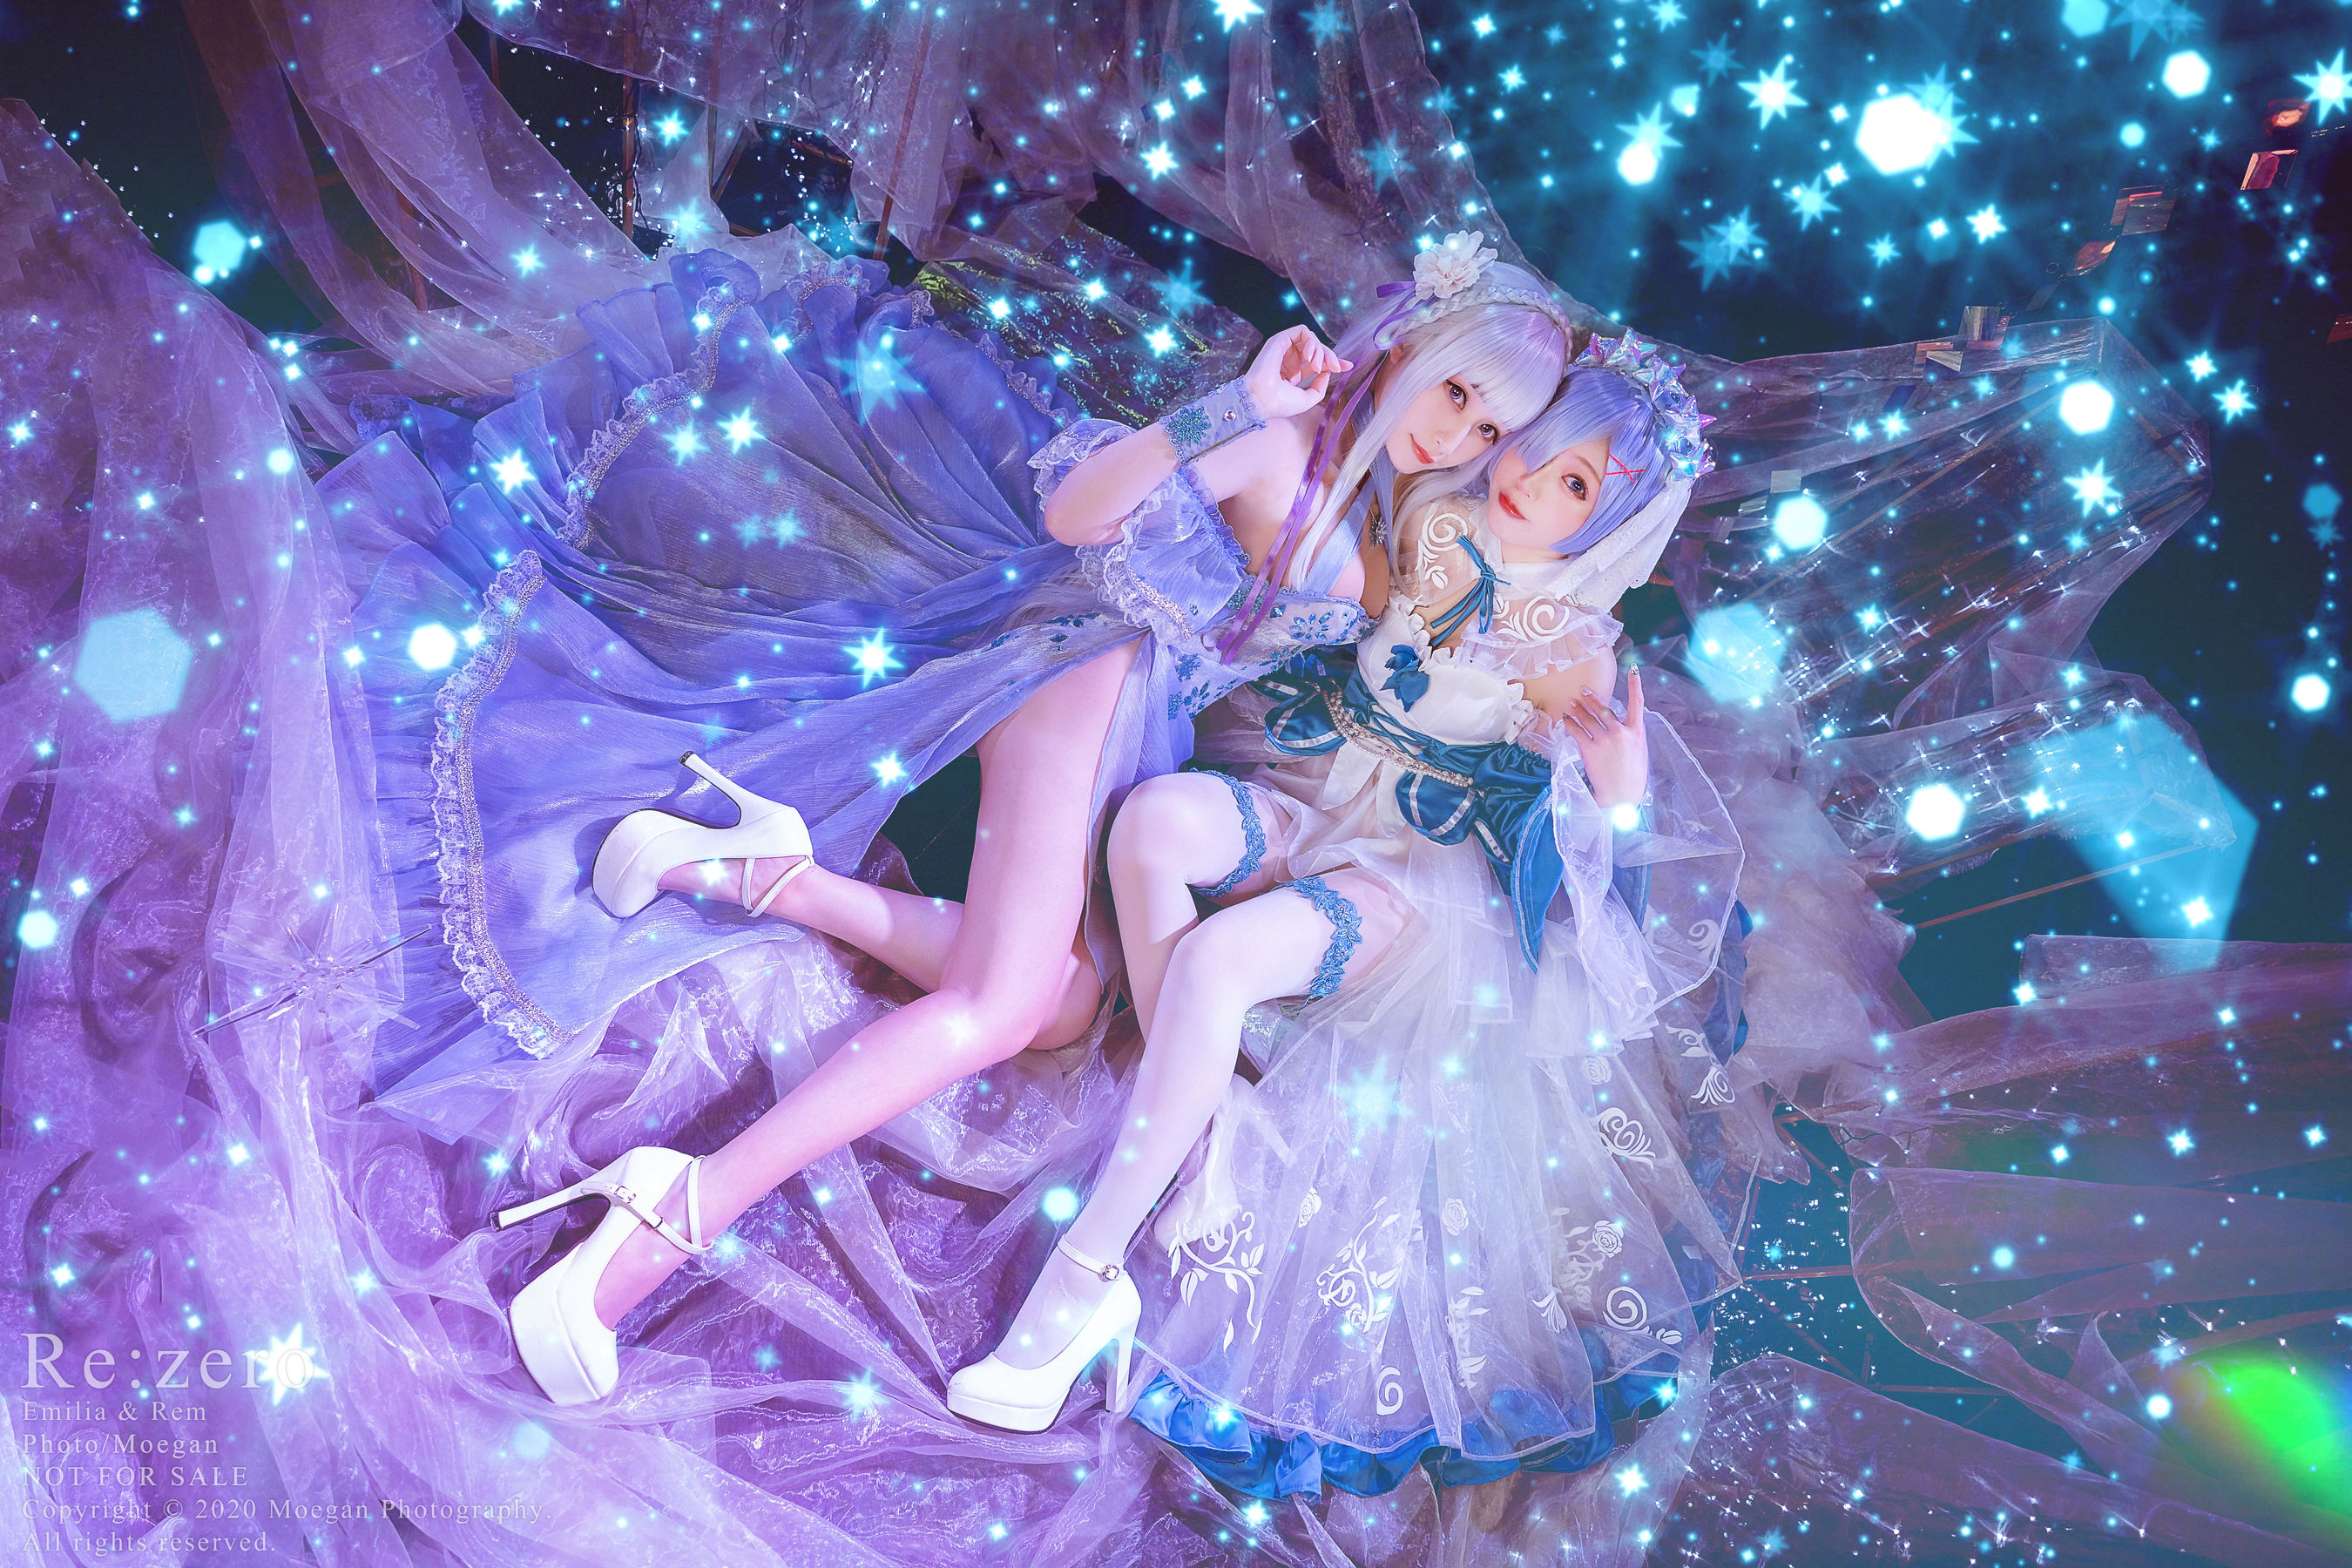 Miyana Mi & Zi Tao – Crystal Dress Photo Set